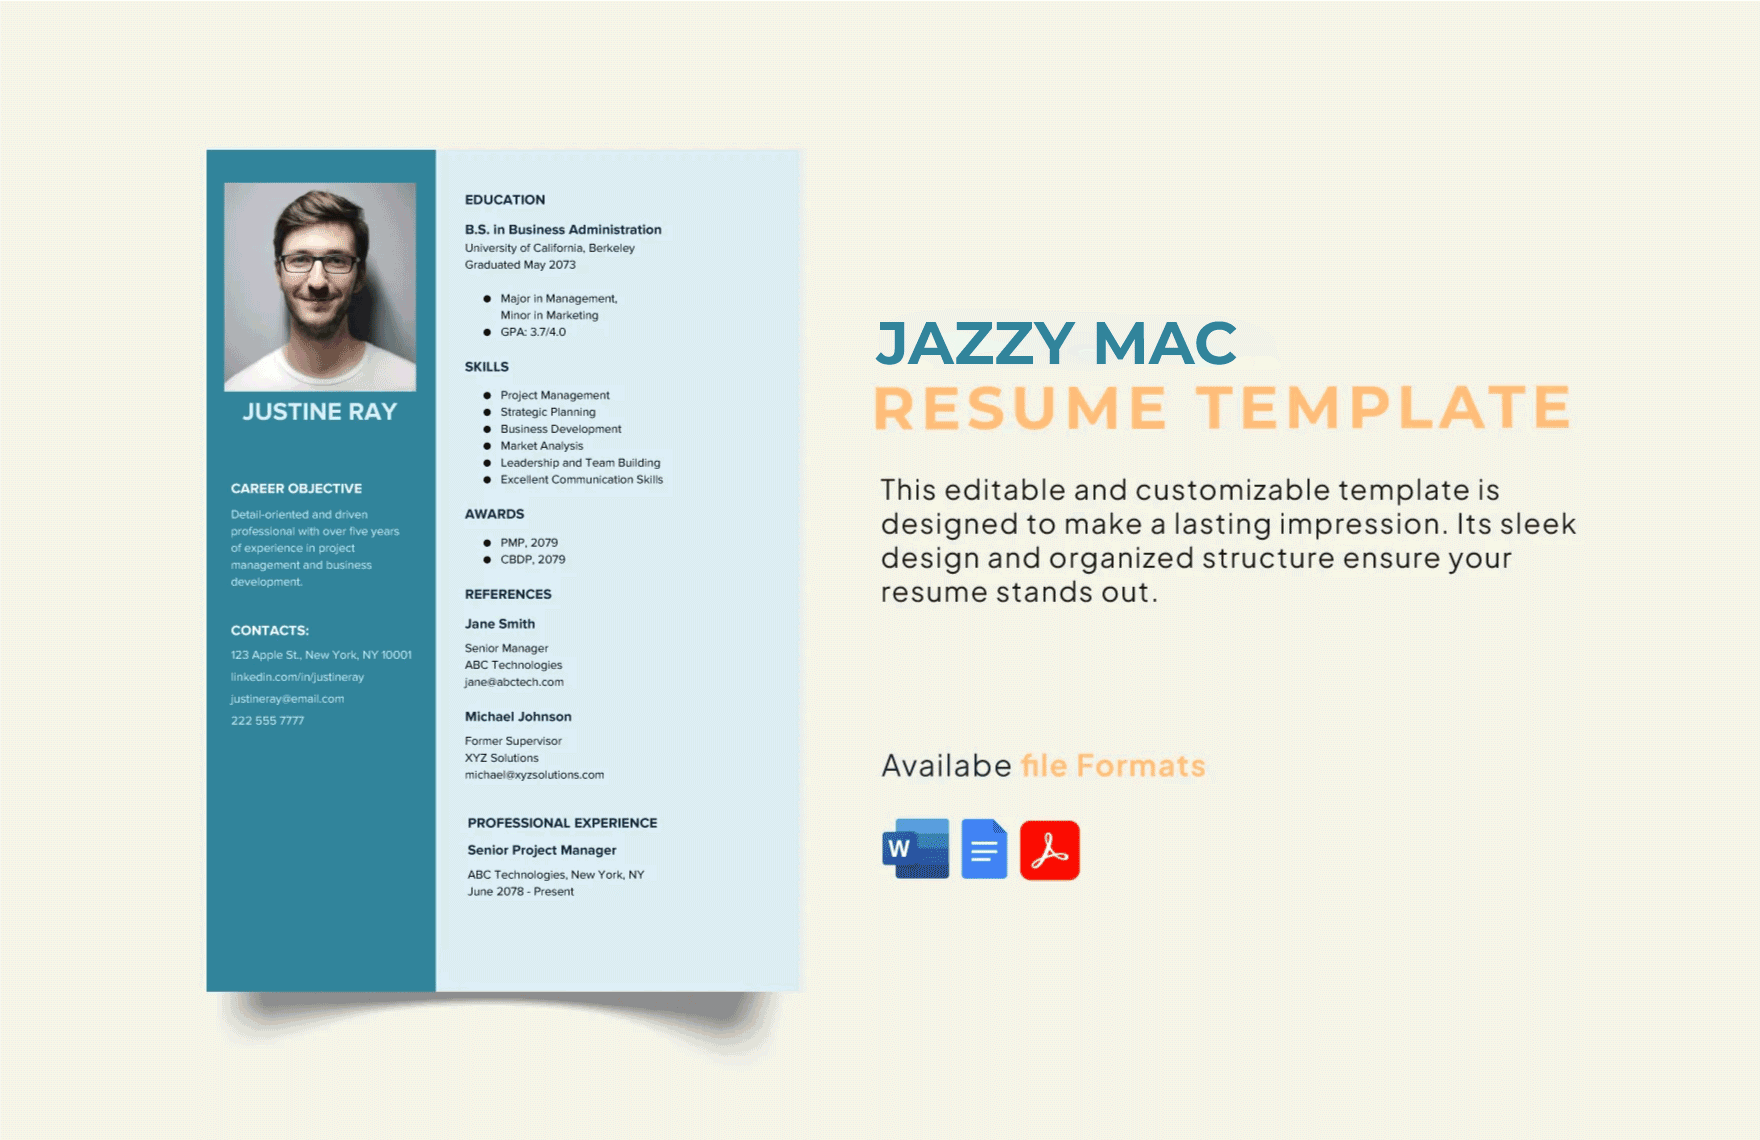 Free Jazzy Mac Resume Template